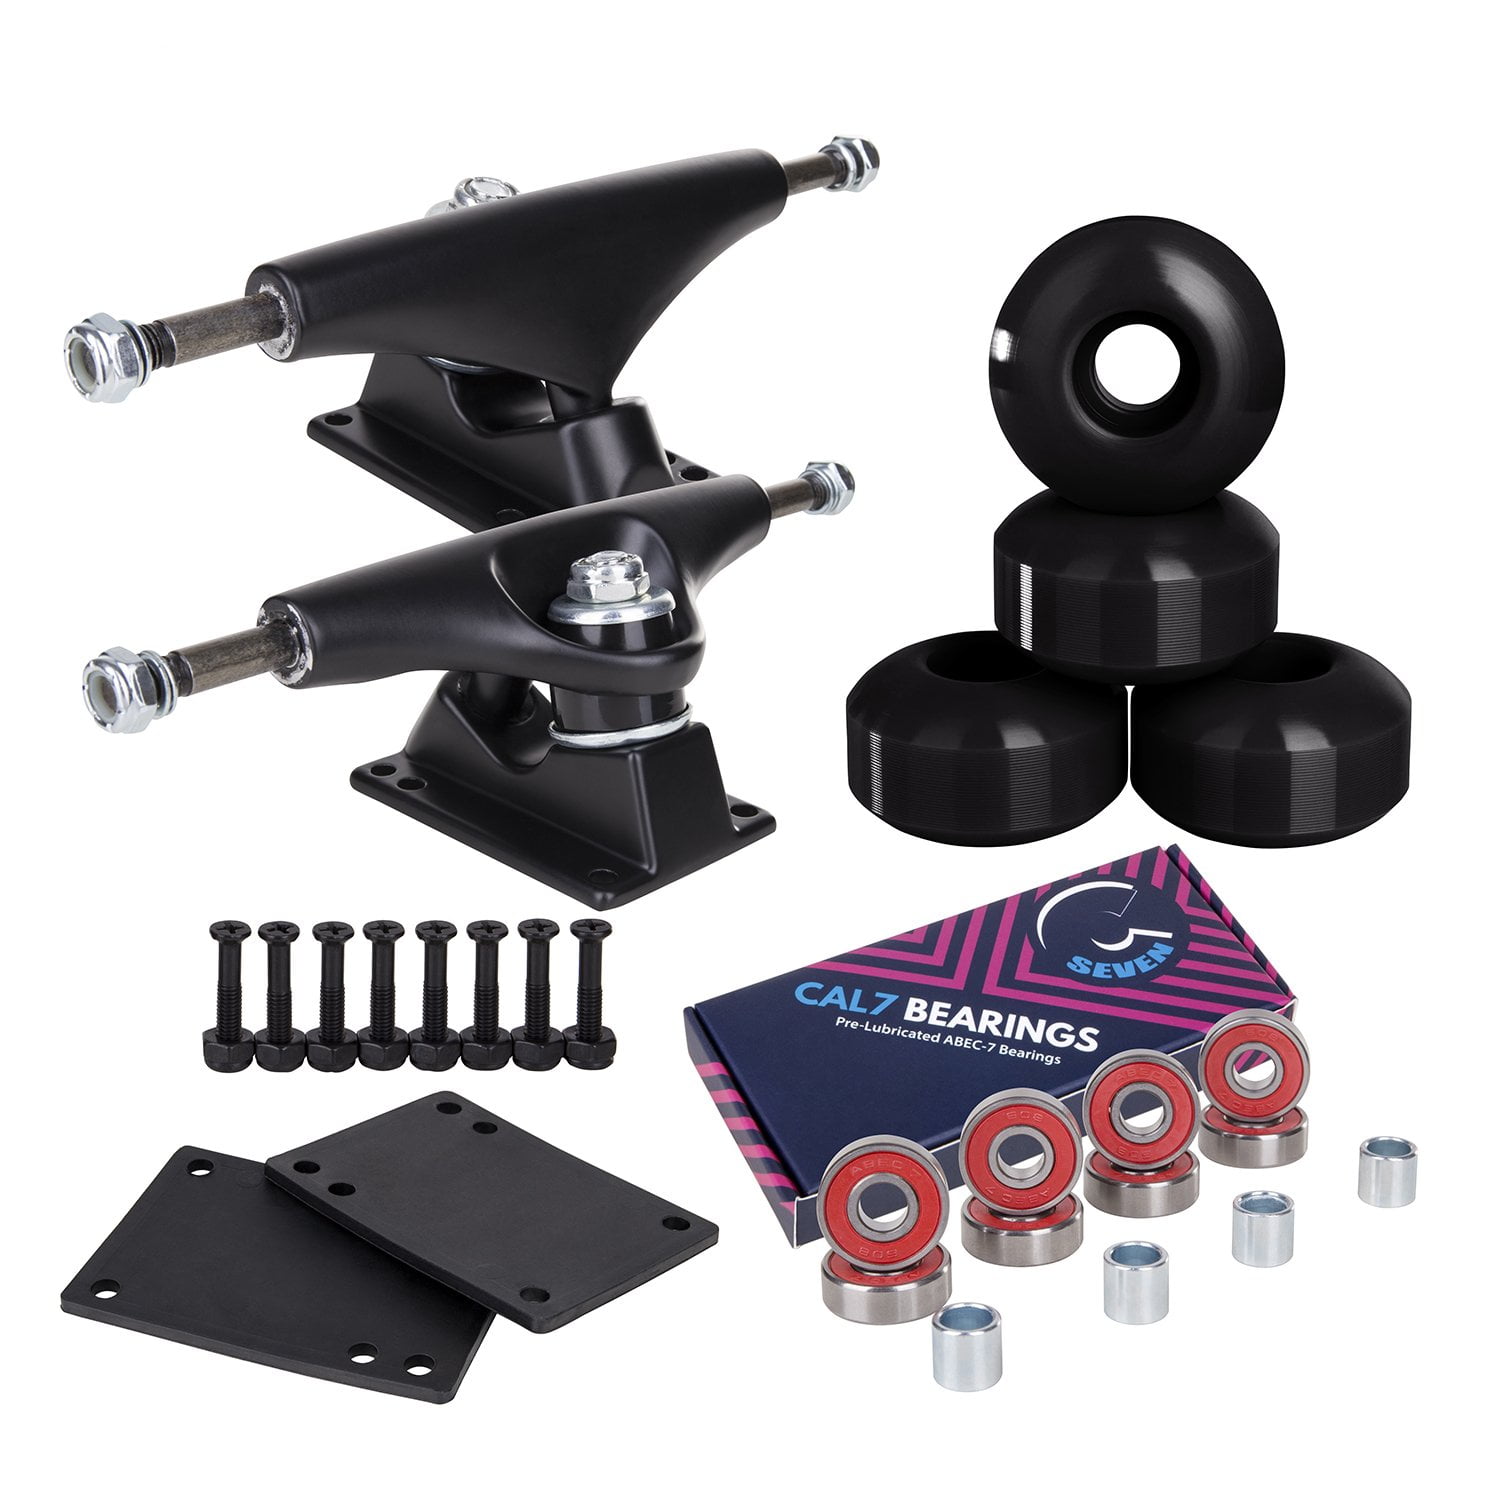 Bearings Tool,Combo Set 5.0 Inch BLACK / GREY Skate Trucks ROUGH 7 Wheels 